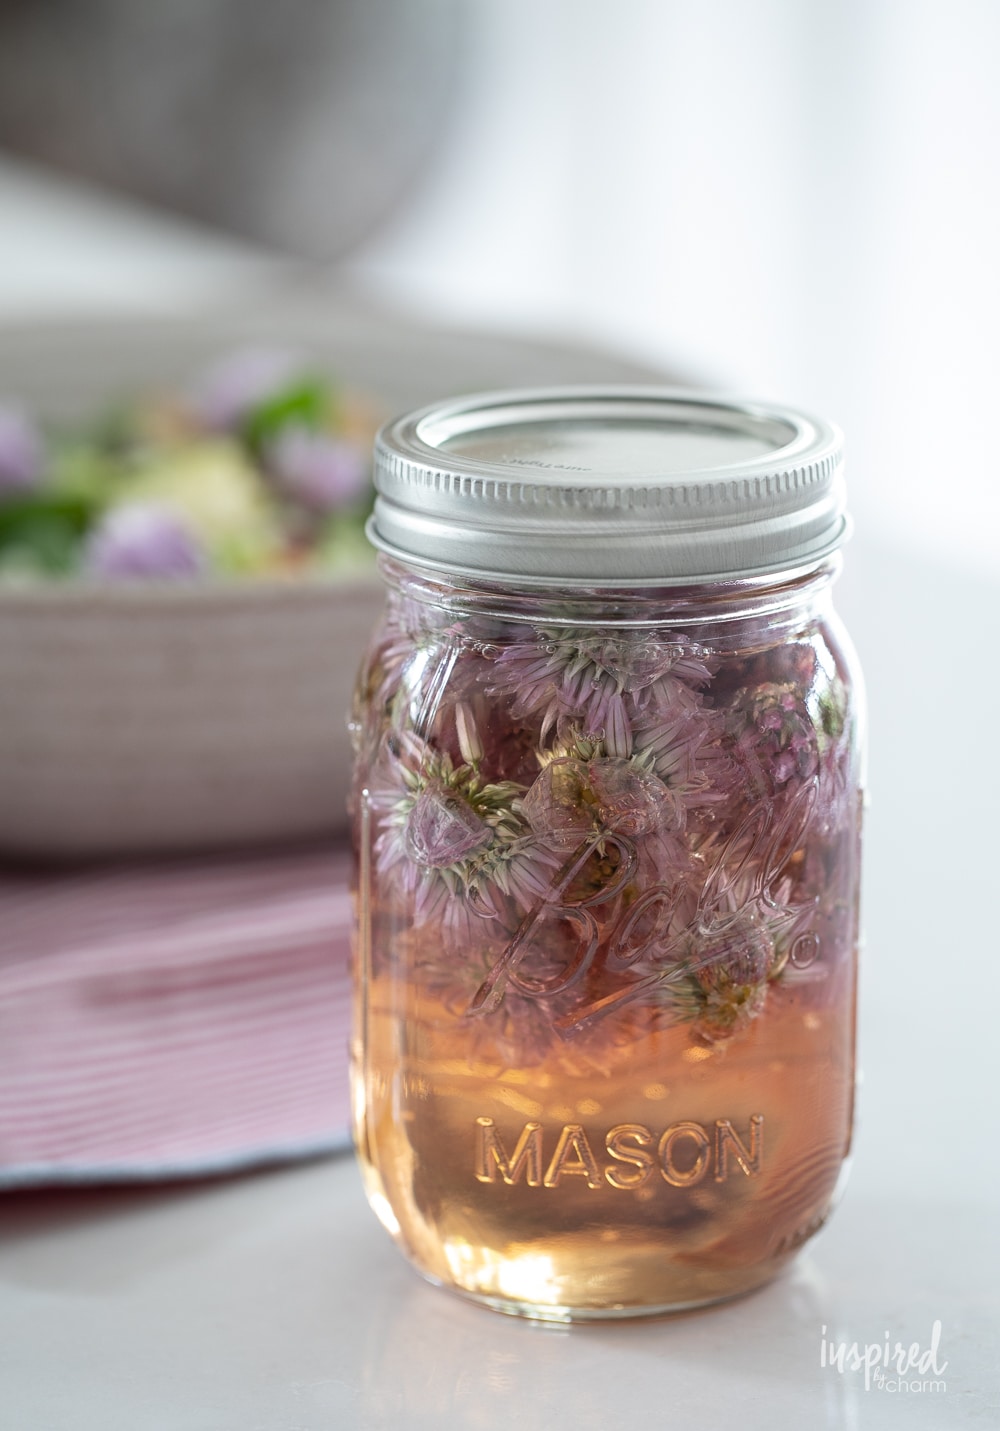 Easy Chive Blossom Vinegar Recipe